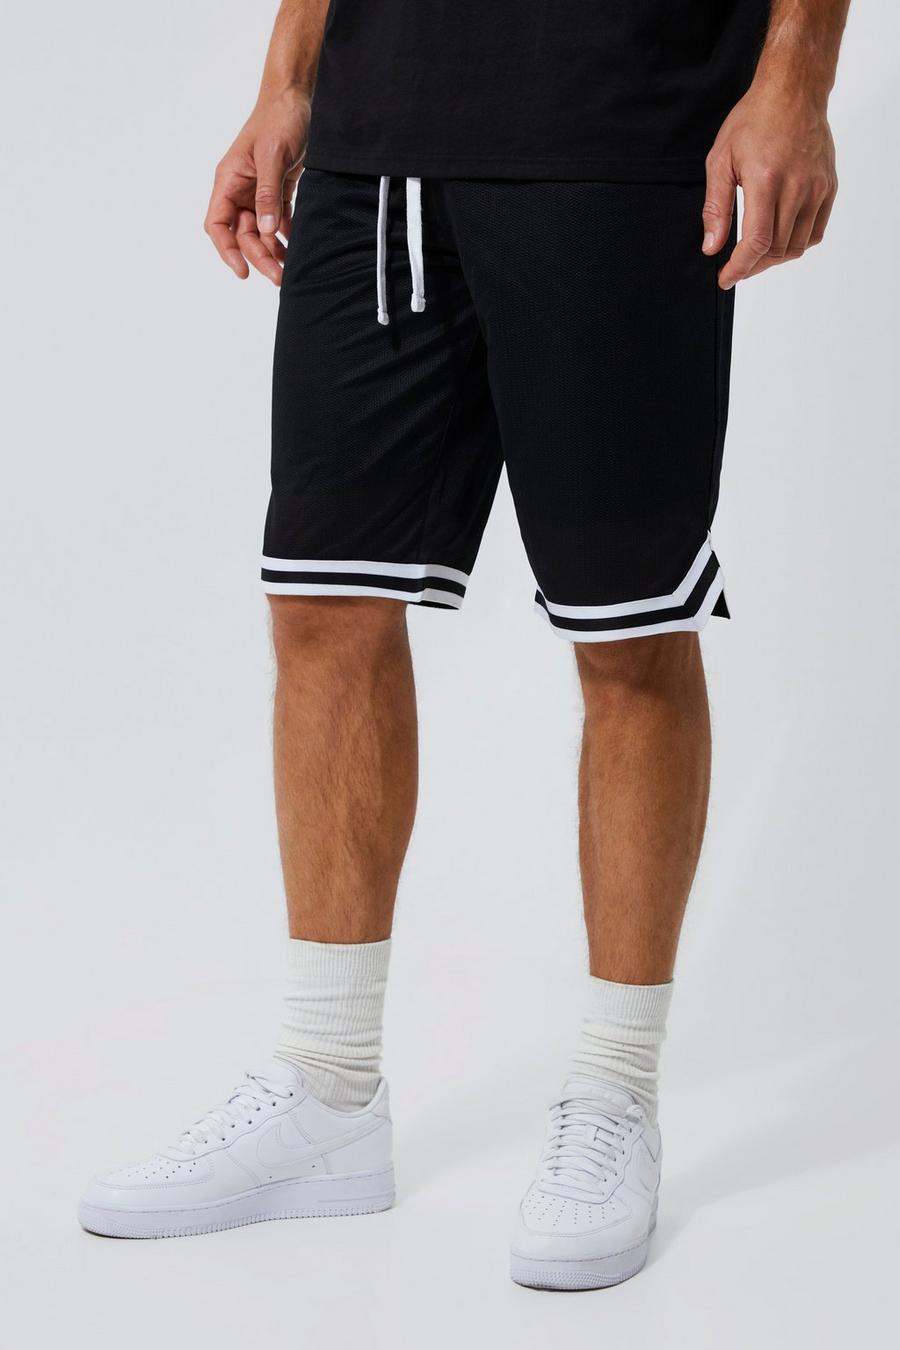 Pantalones cortos Tall de malla estilo baloncesto con cinta, Negro